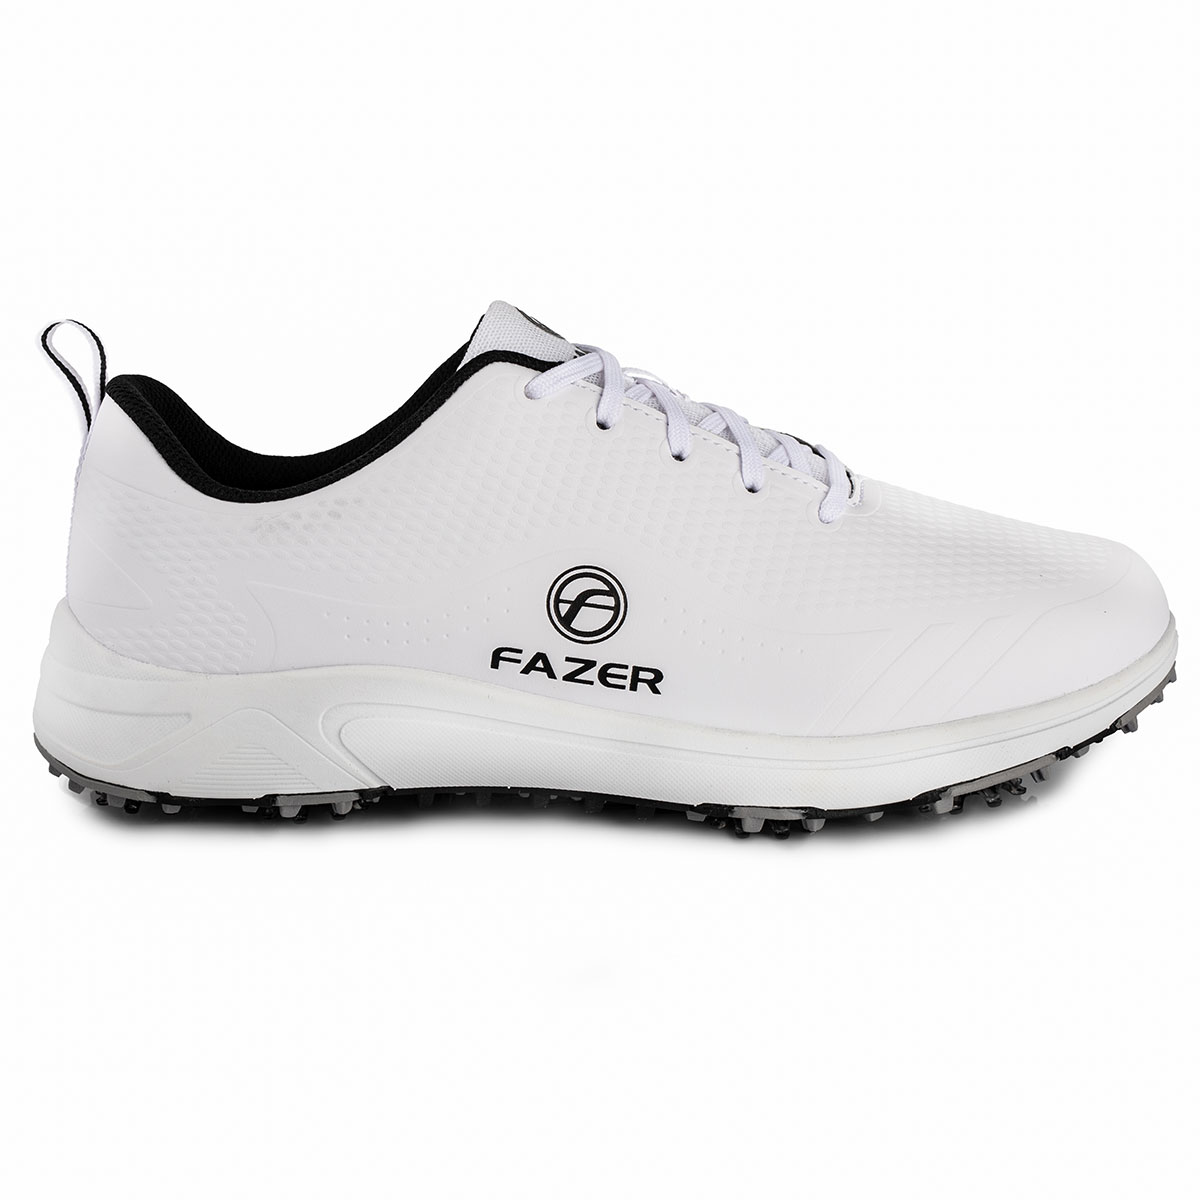 Fazer Men’s Ventura Spiked Men's Golf Shoes - White